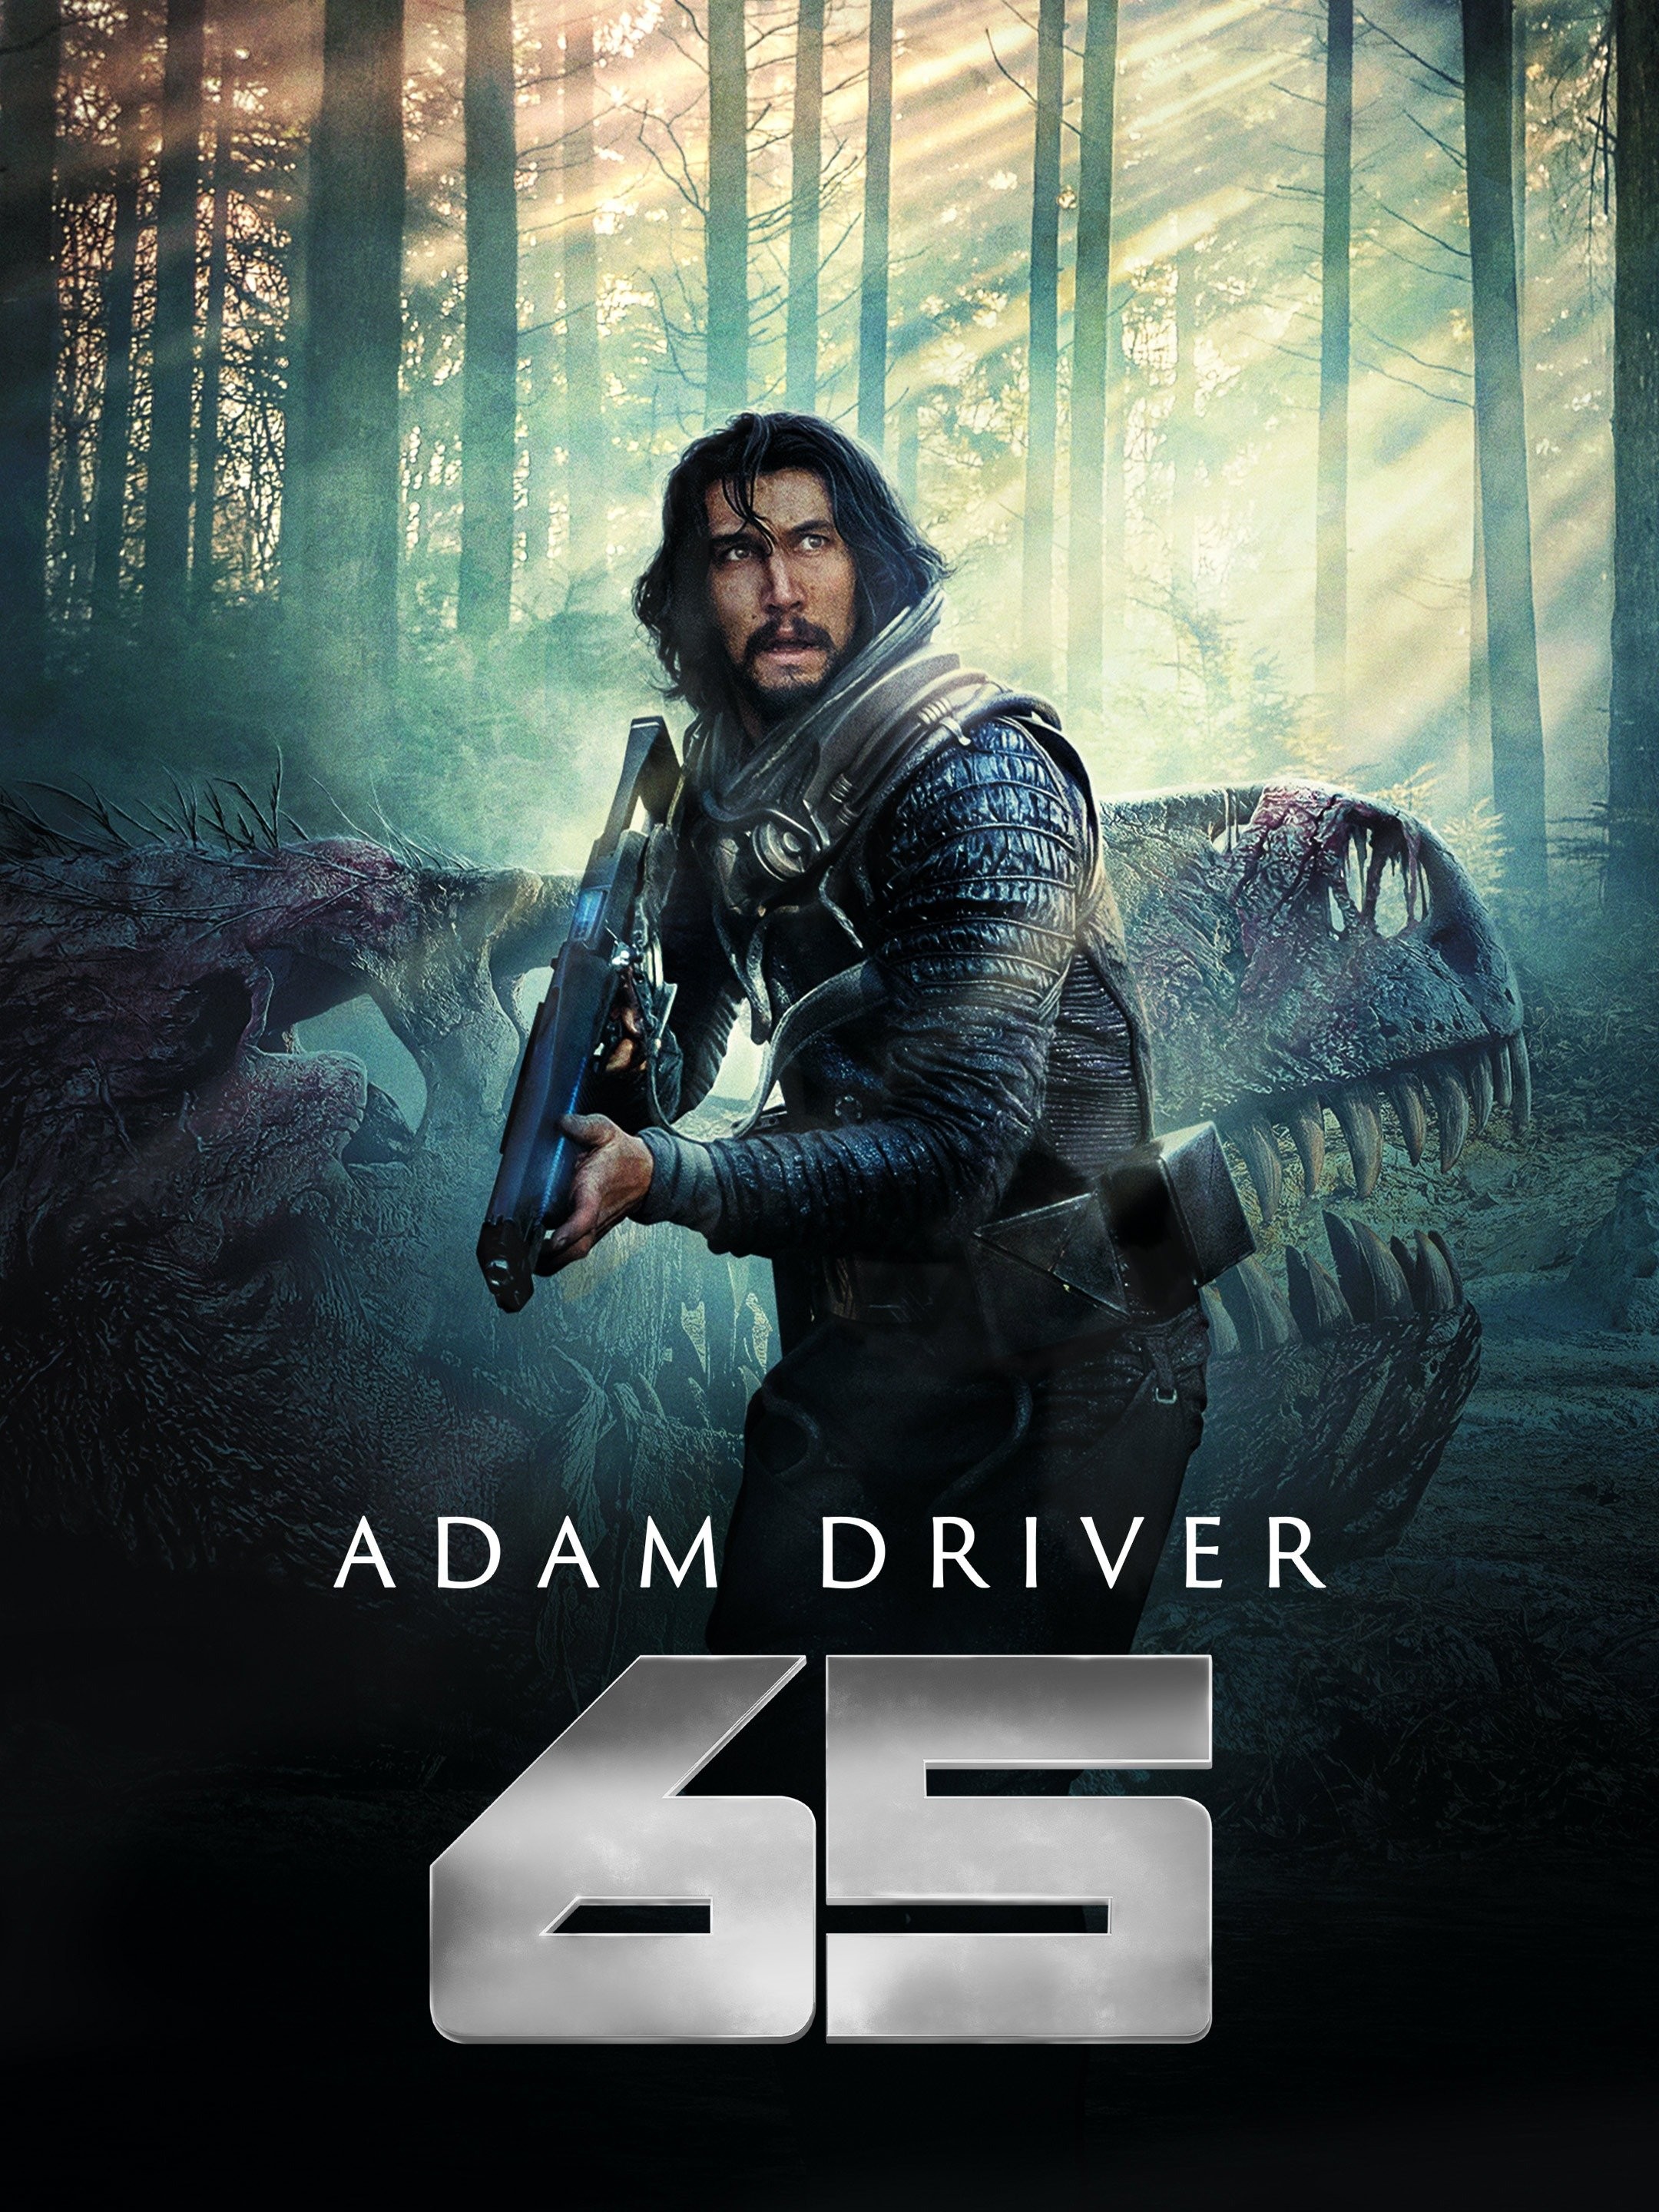 Scream' 6 Slices Box Office; Adam Driver '65' Tanks On Rotten Tomatoes